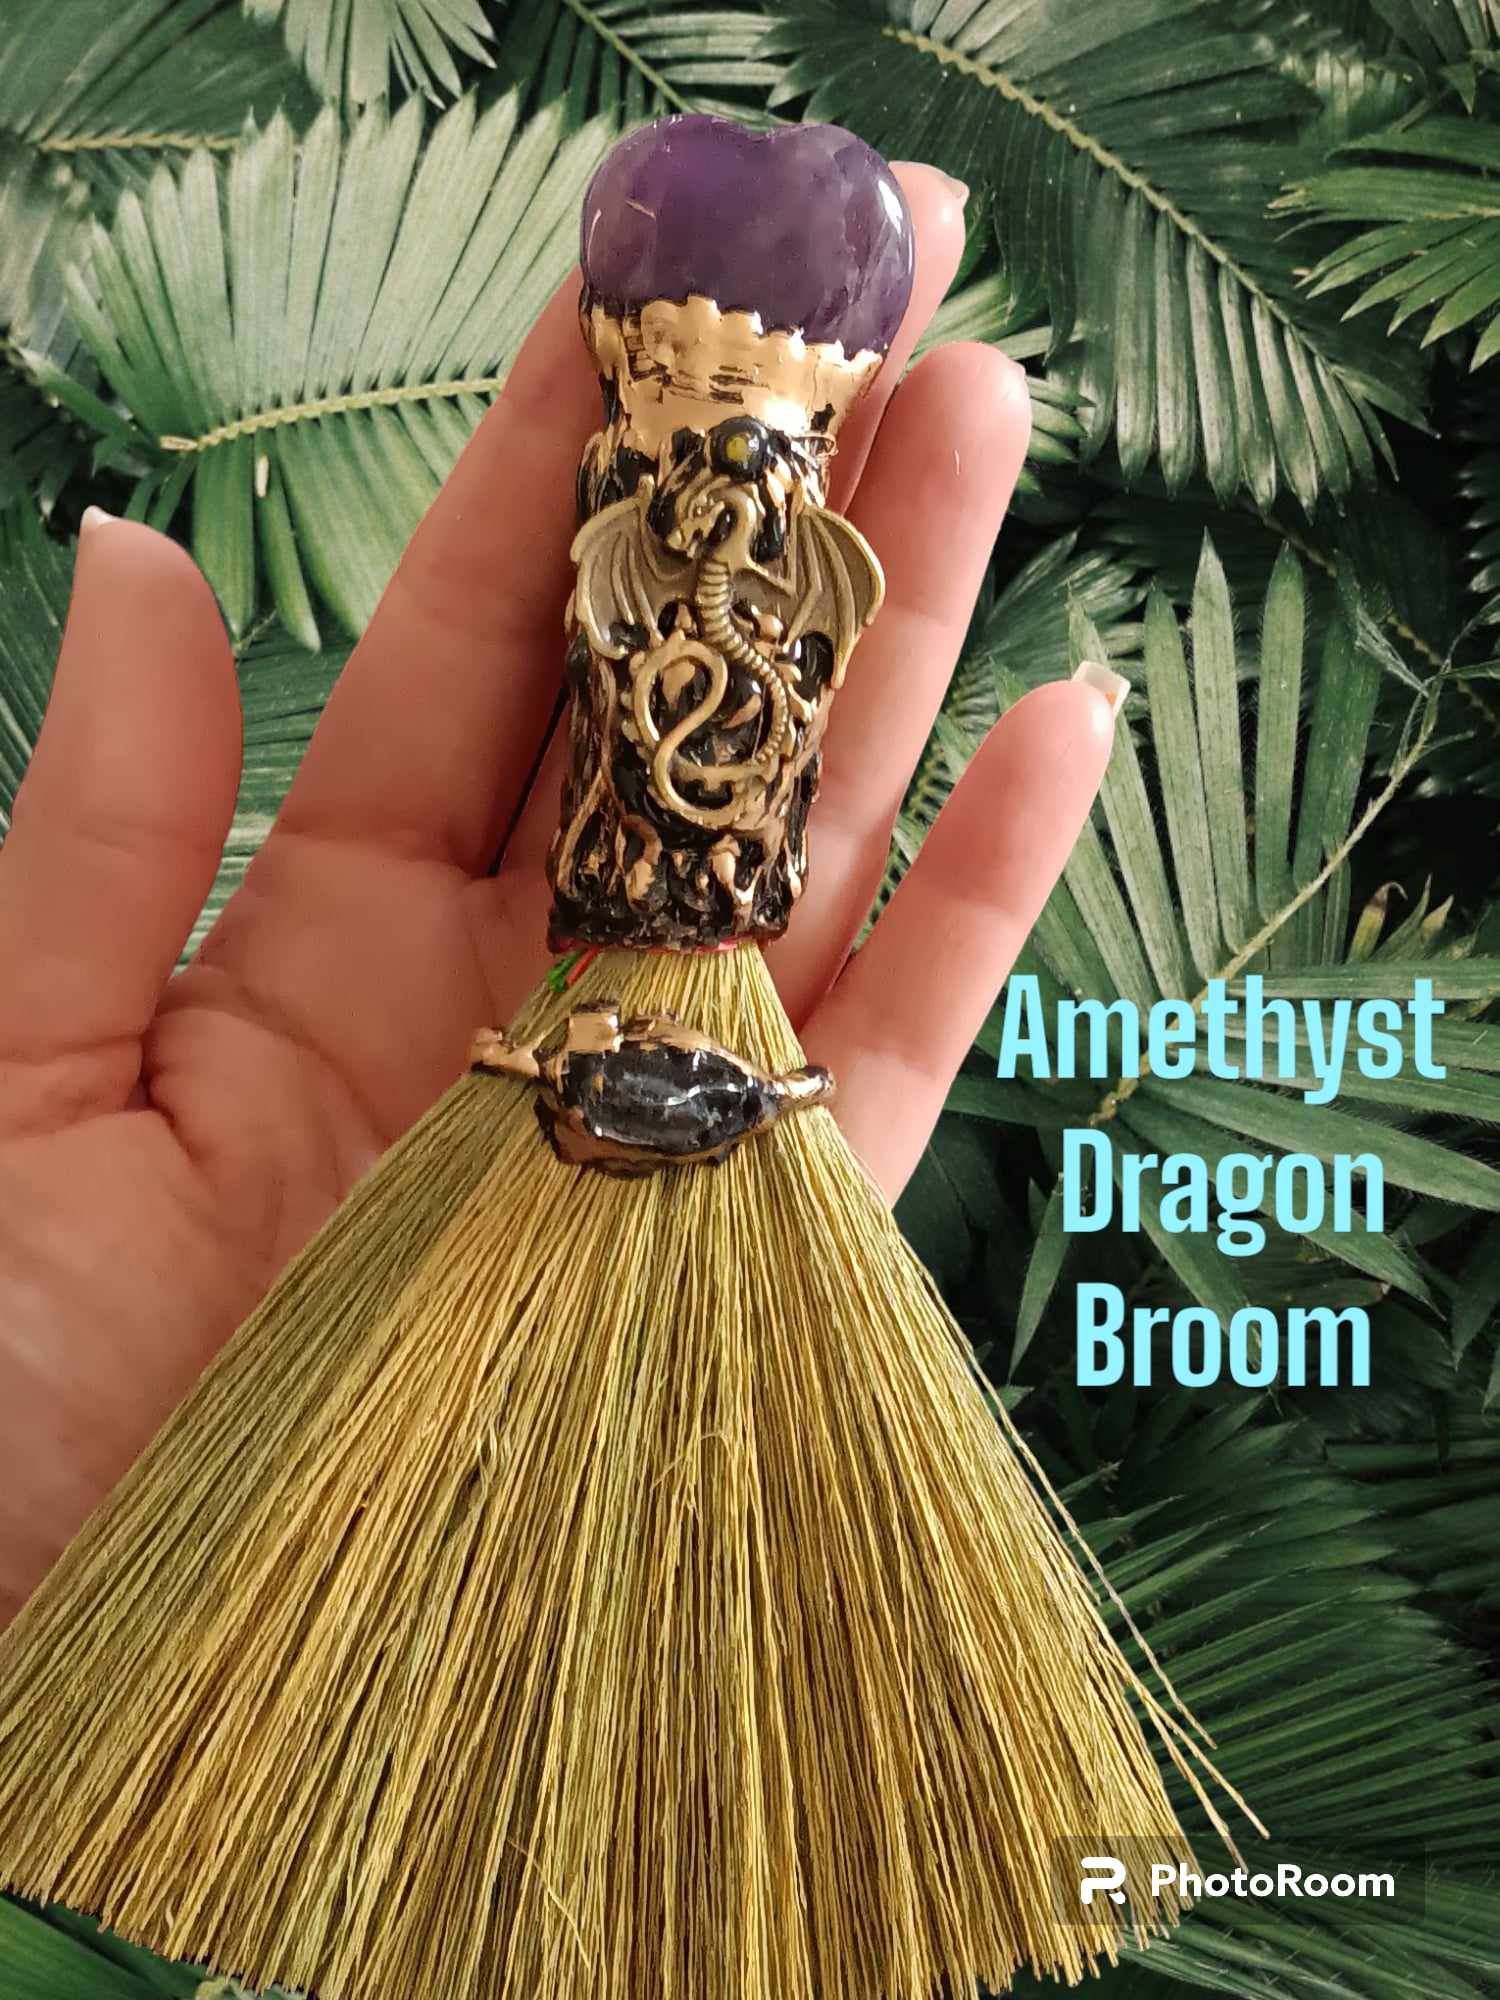 Amethyst Heart Crystal Broom with Dragon Charm